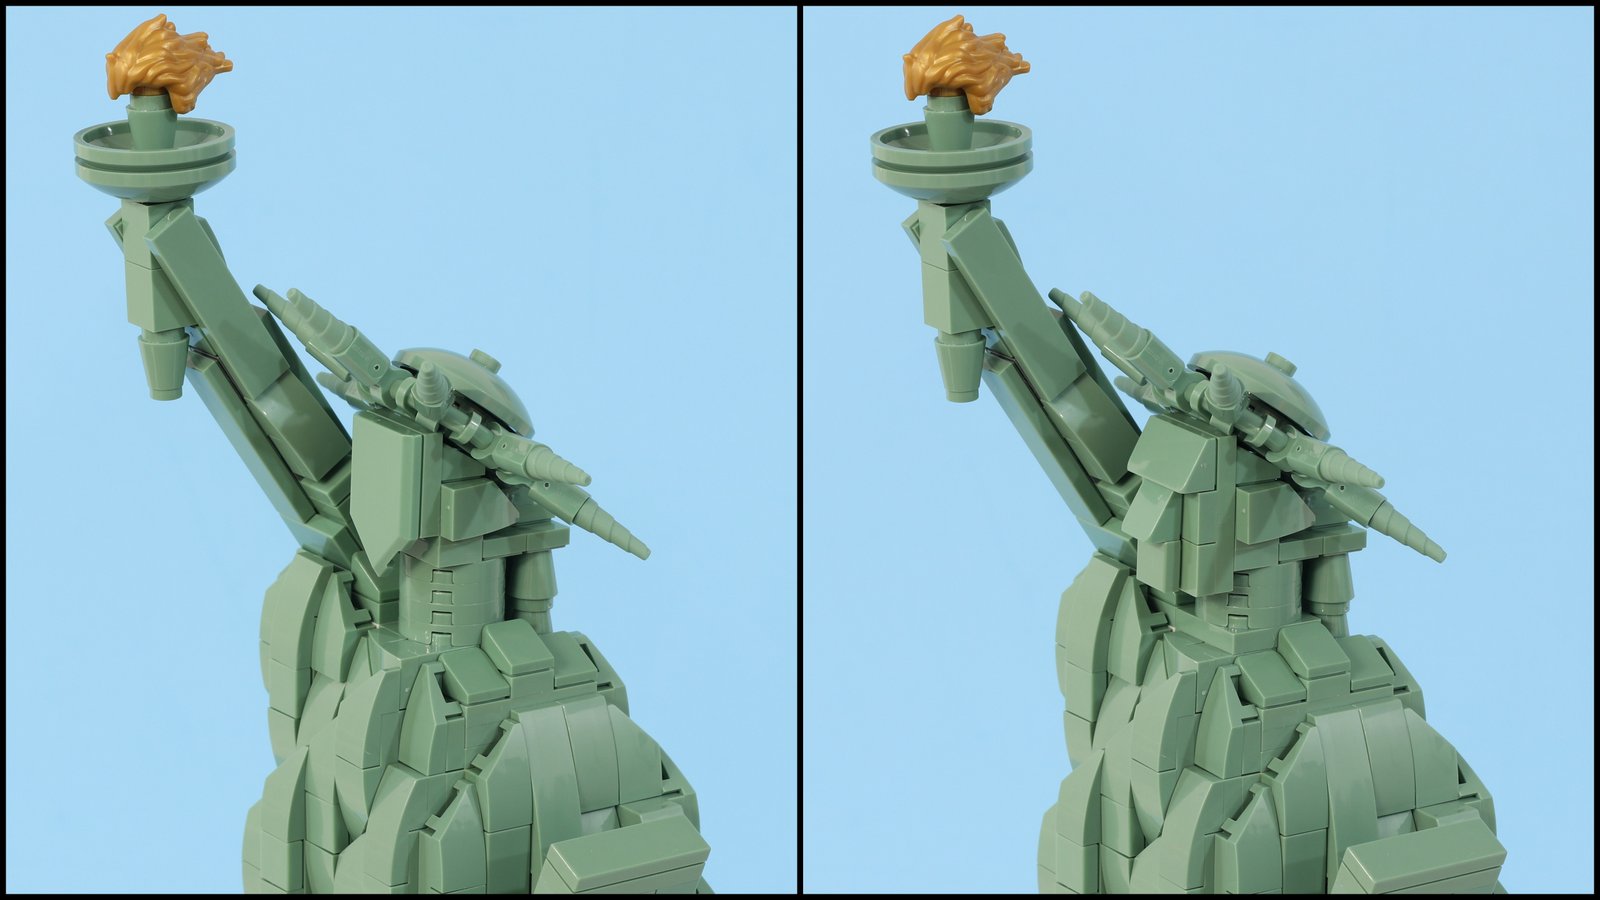 https://www.hellobricks.com/wp-content/uploads/2018/06/LEGO-Architecture-21042-Statue-of-Liberty-facelift.jpg